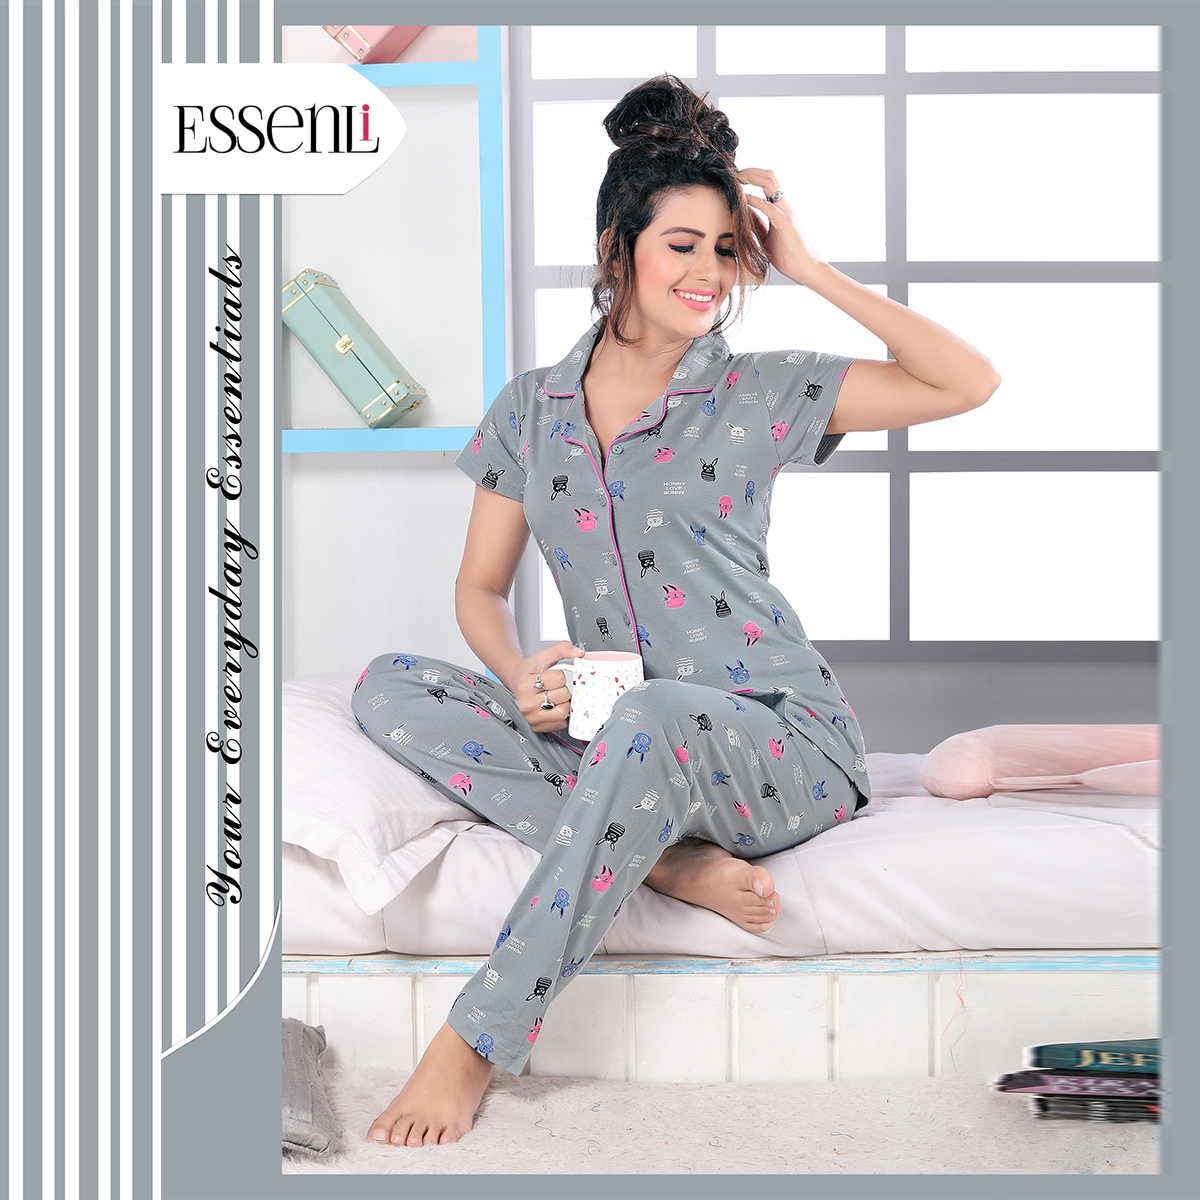 Essenli Cotton Knitted Sleep Wear for Women - Gray